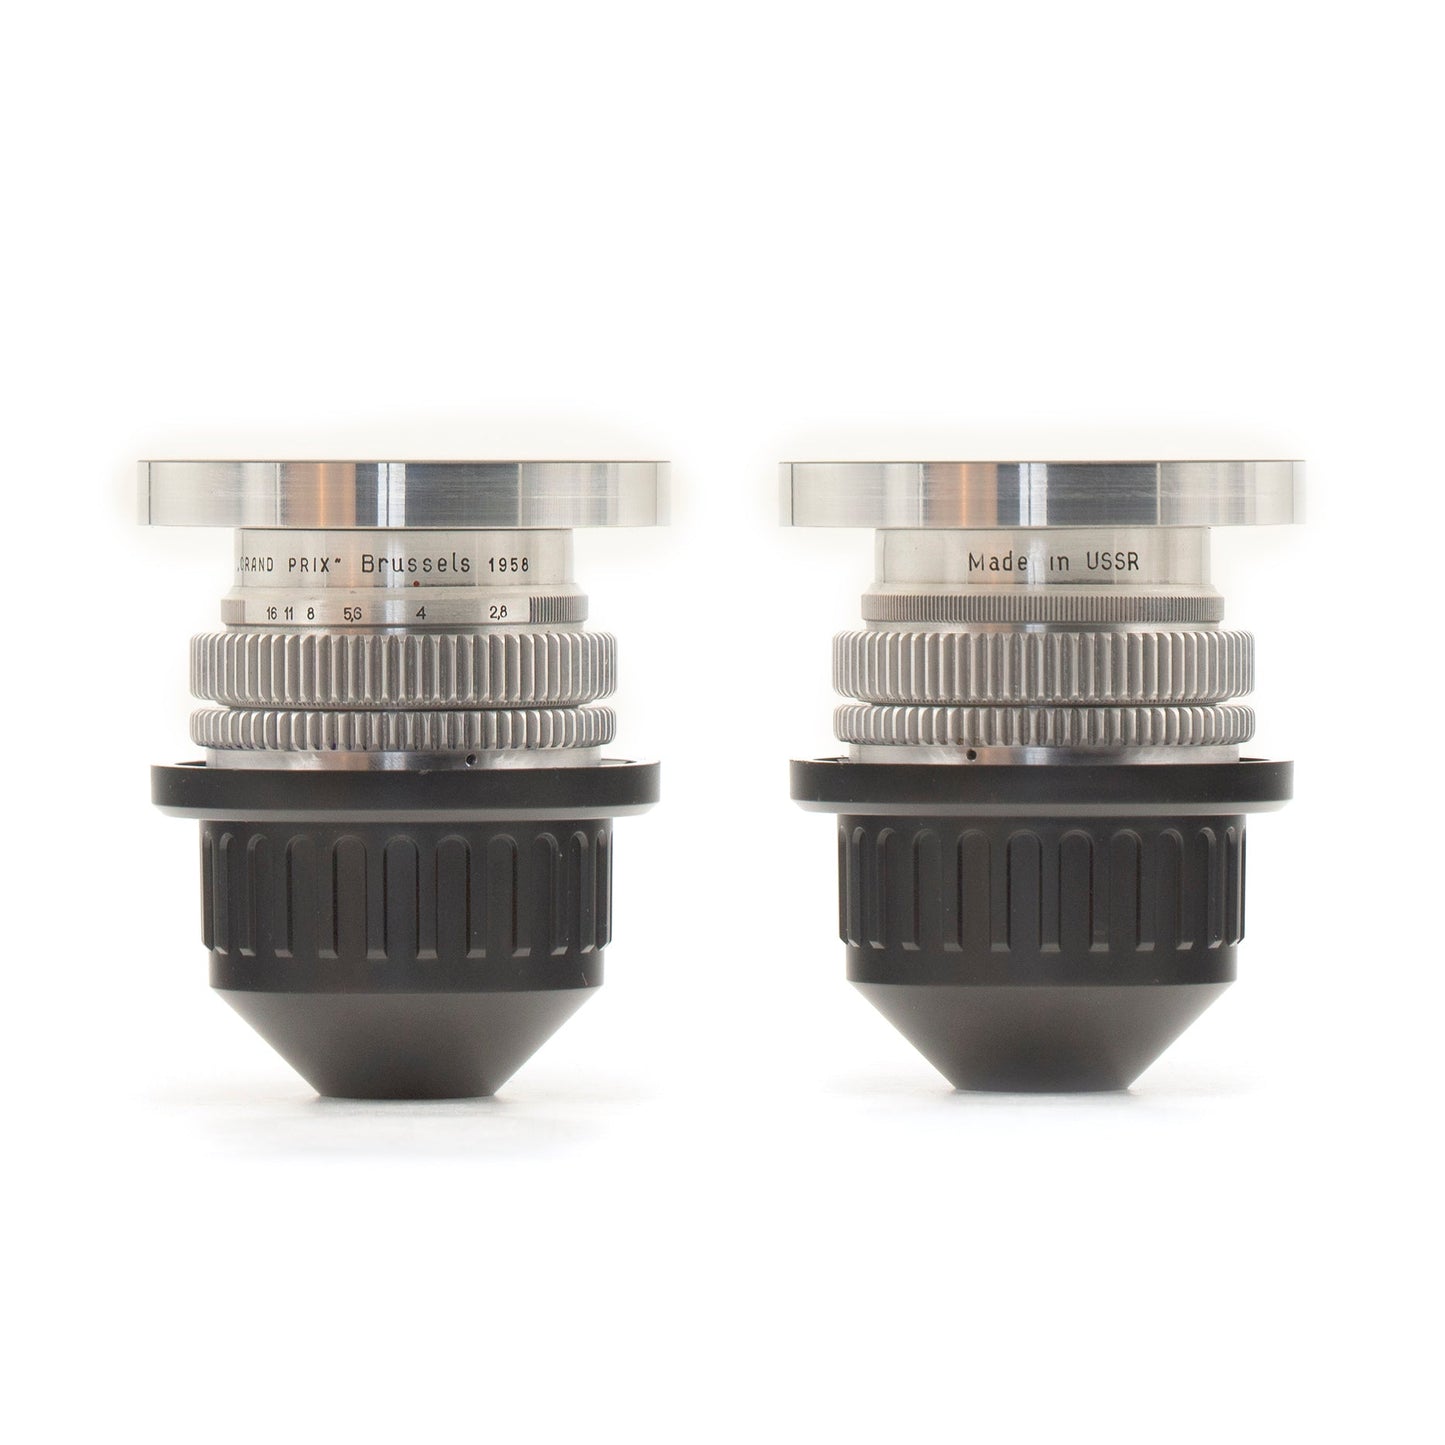 Ultra RARE 37/58/85/133mm Silver Cine Modded Lenses Set For Arri PL w/ Case! - TerPhoto Store